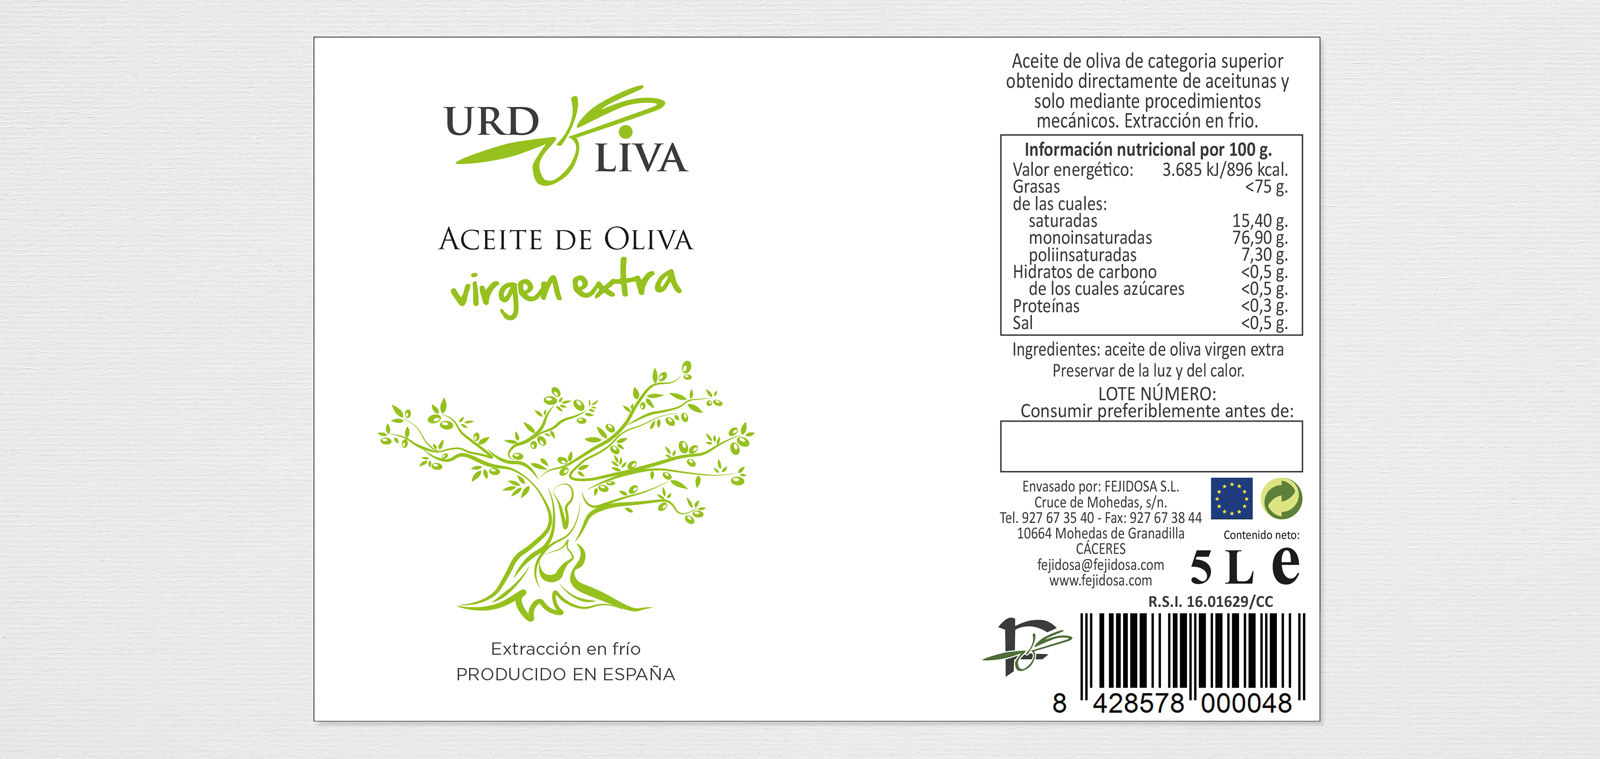 Diseño de logo e imagen corporativa para exportador de aceite de oliva virgen extra URDOLIVA